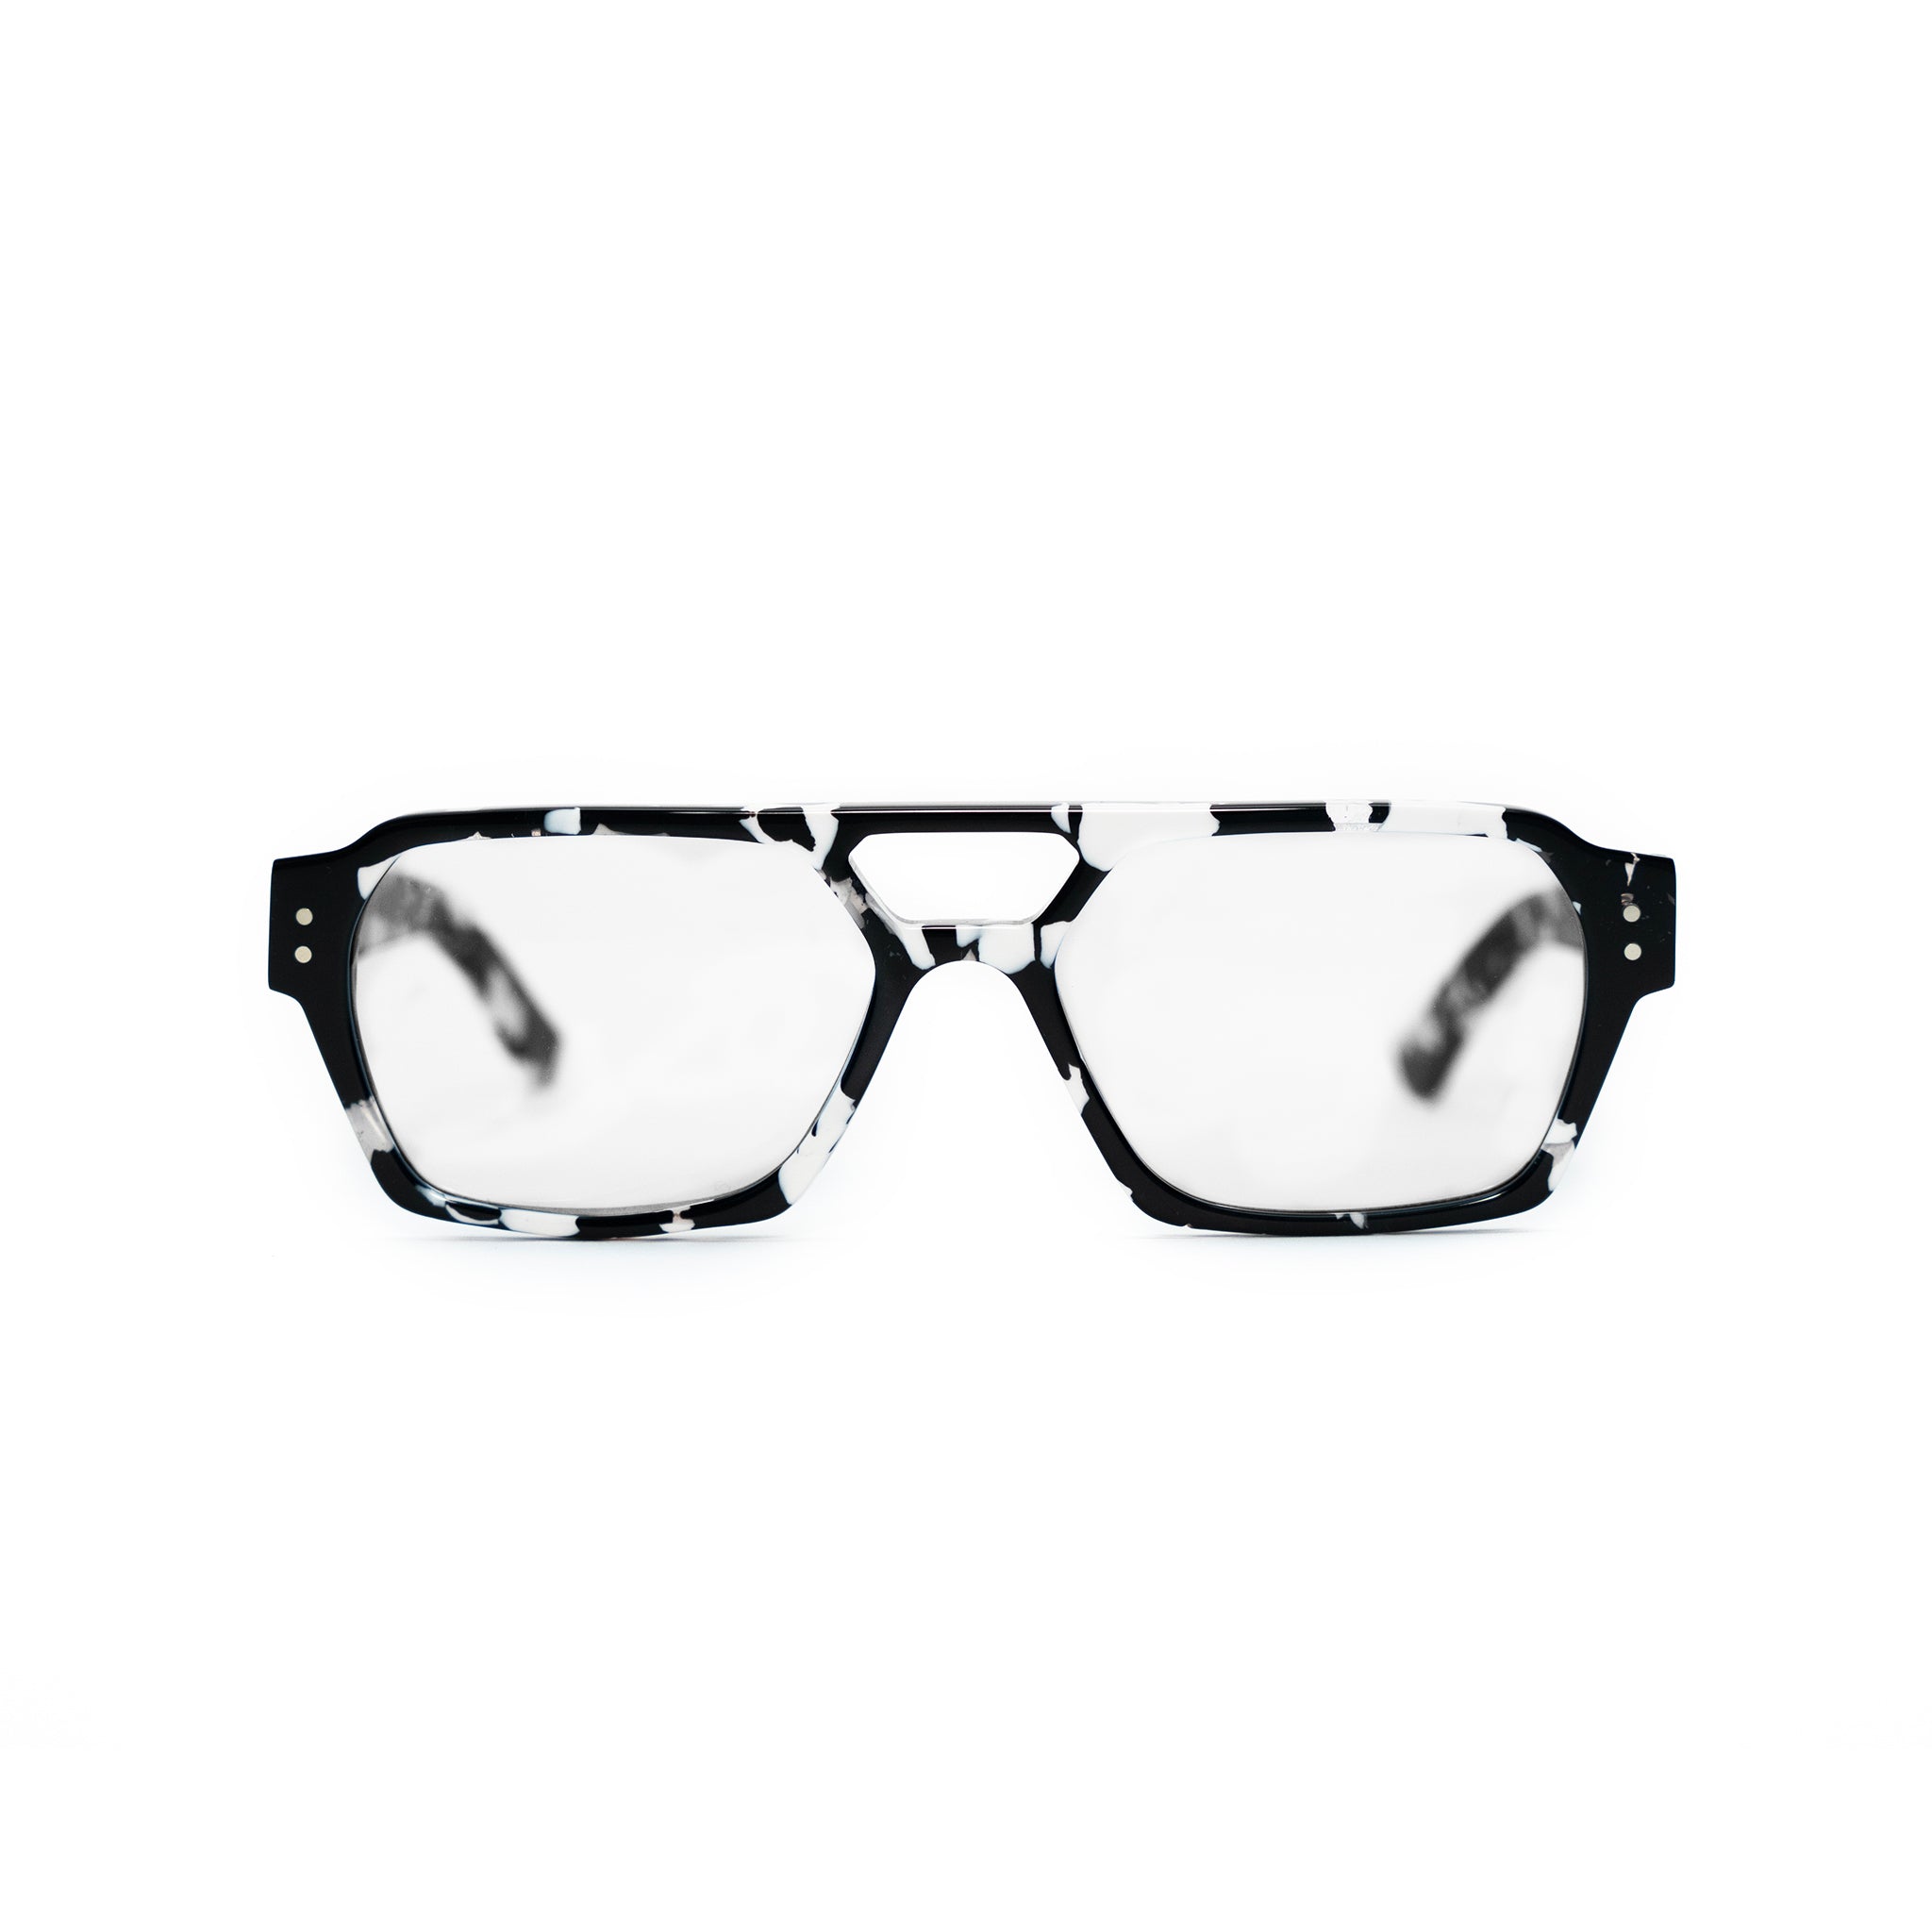 Ego optical glasses in black & white from Ameos Eyewear.